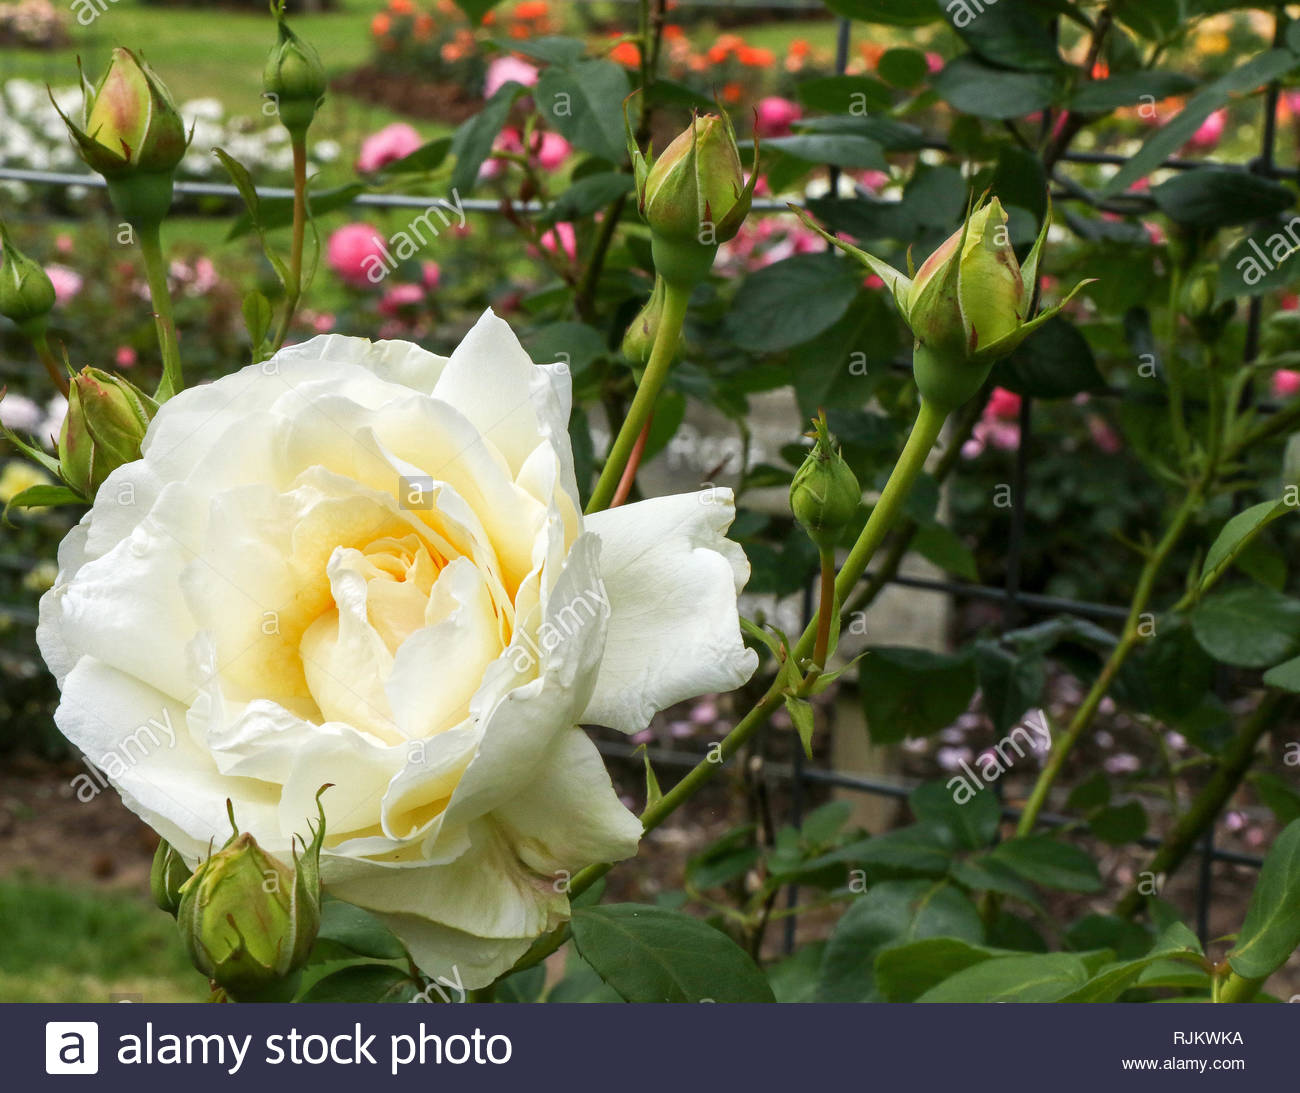 crme de la crme a creamy white climbing rose in bloom in 2018 RJKWKA